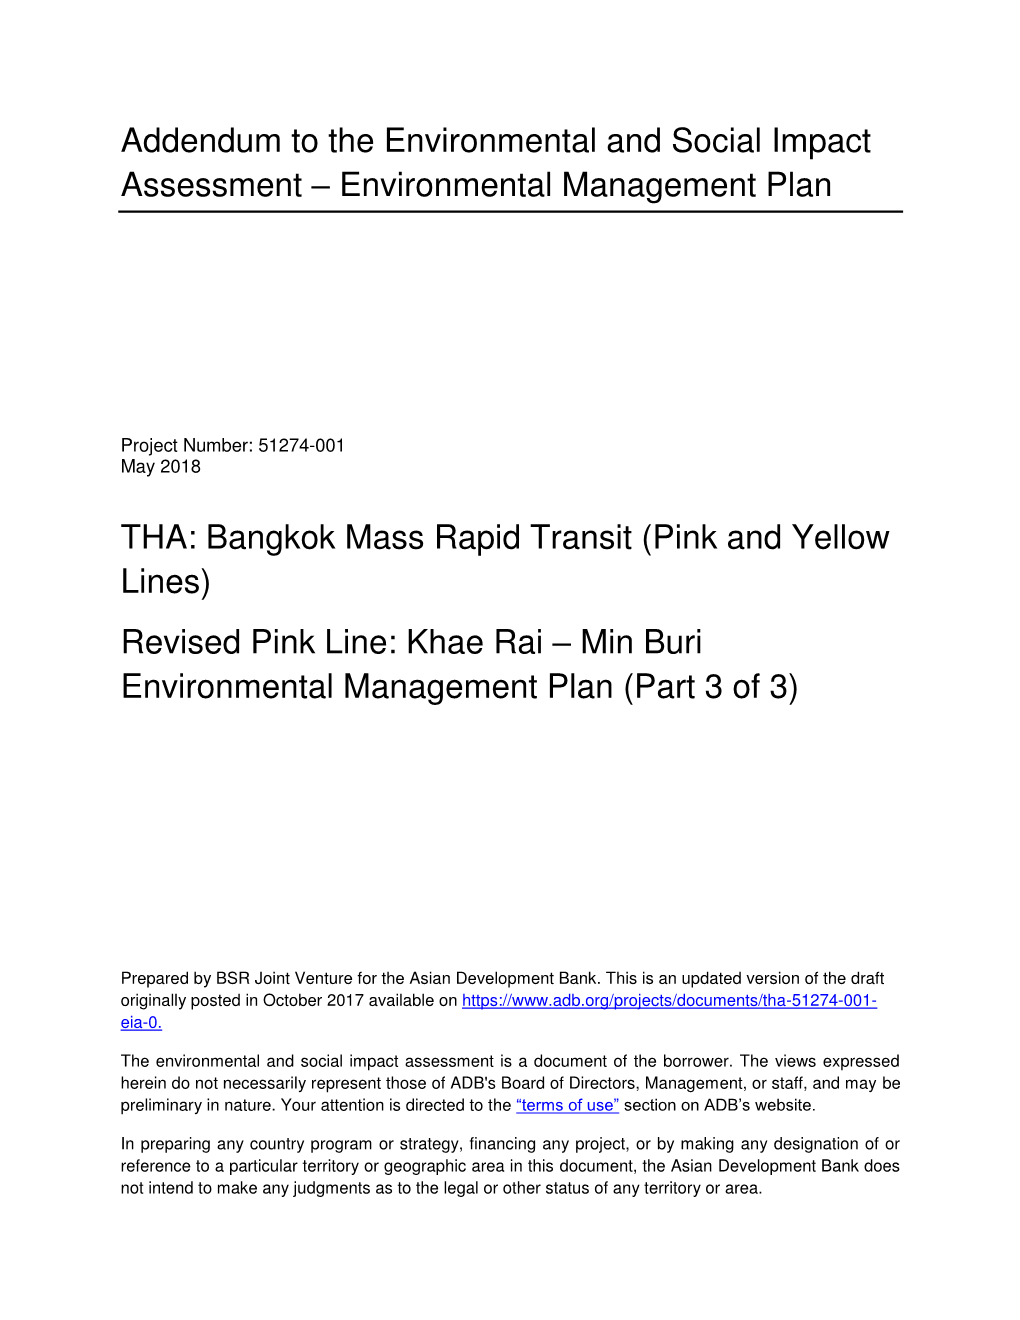 Revised Pink Line: Khae Rai – Min Buri Environmental Management Plan (Part 3 of 3)